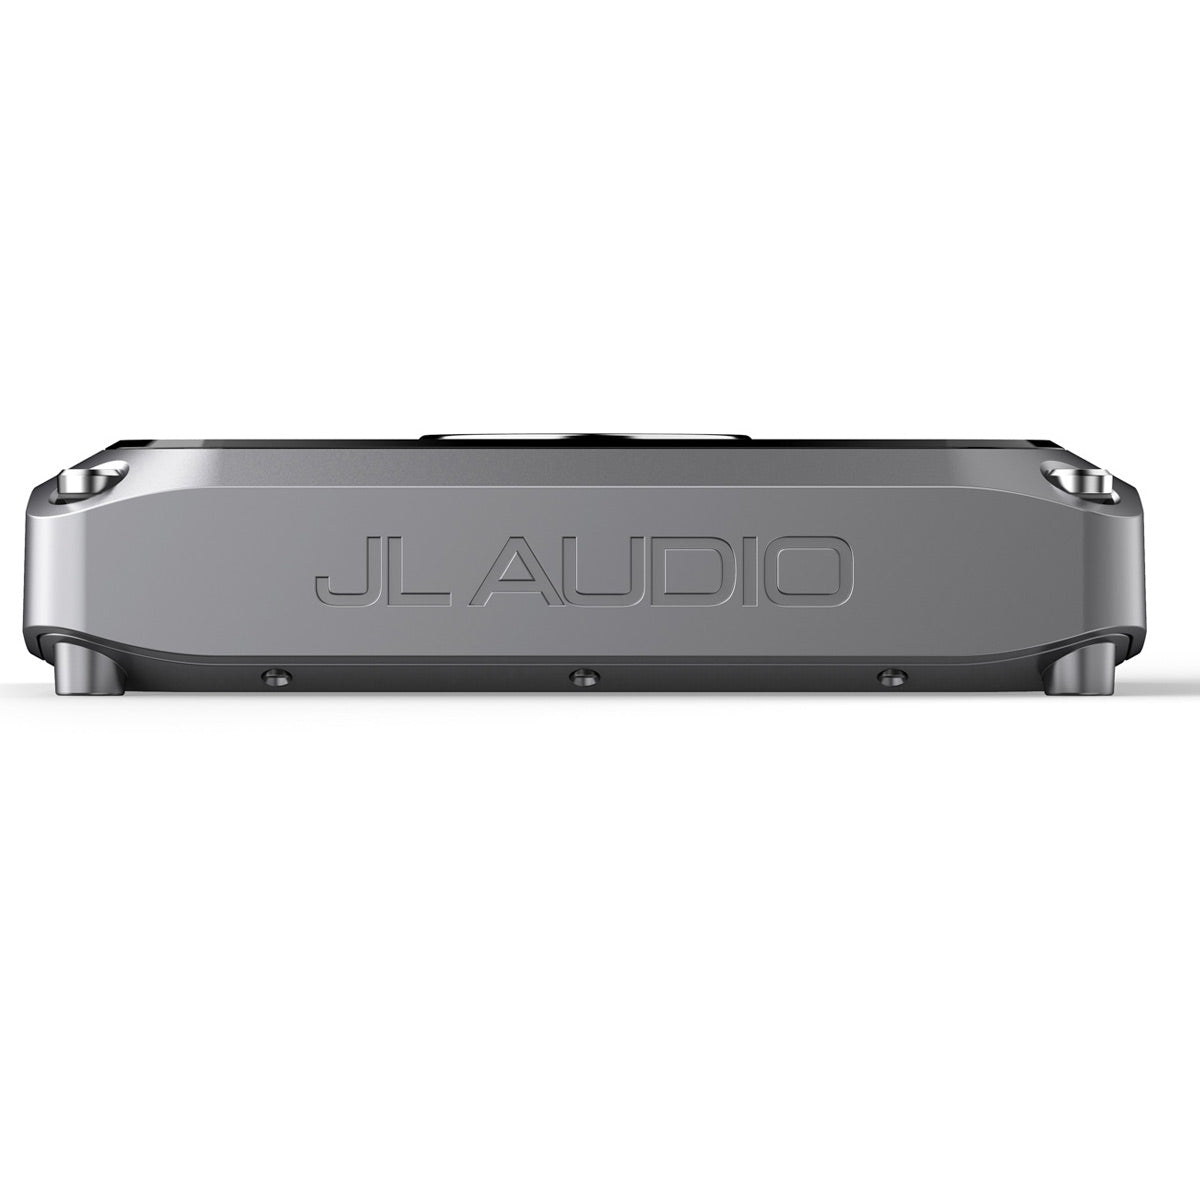 JL Audio VX600/1i 600 Watts x 1 at 2 Ohms Monoblock Subwoofer Amplifier w/ DSP